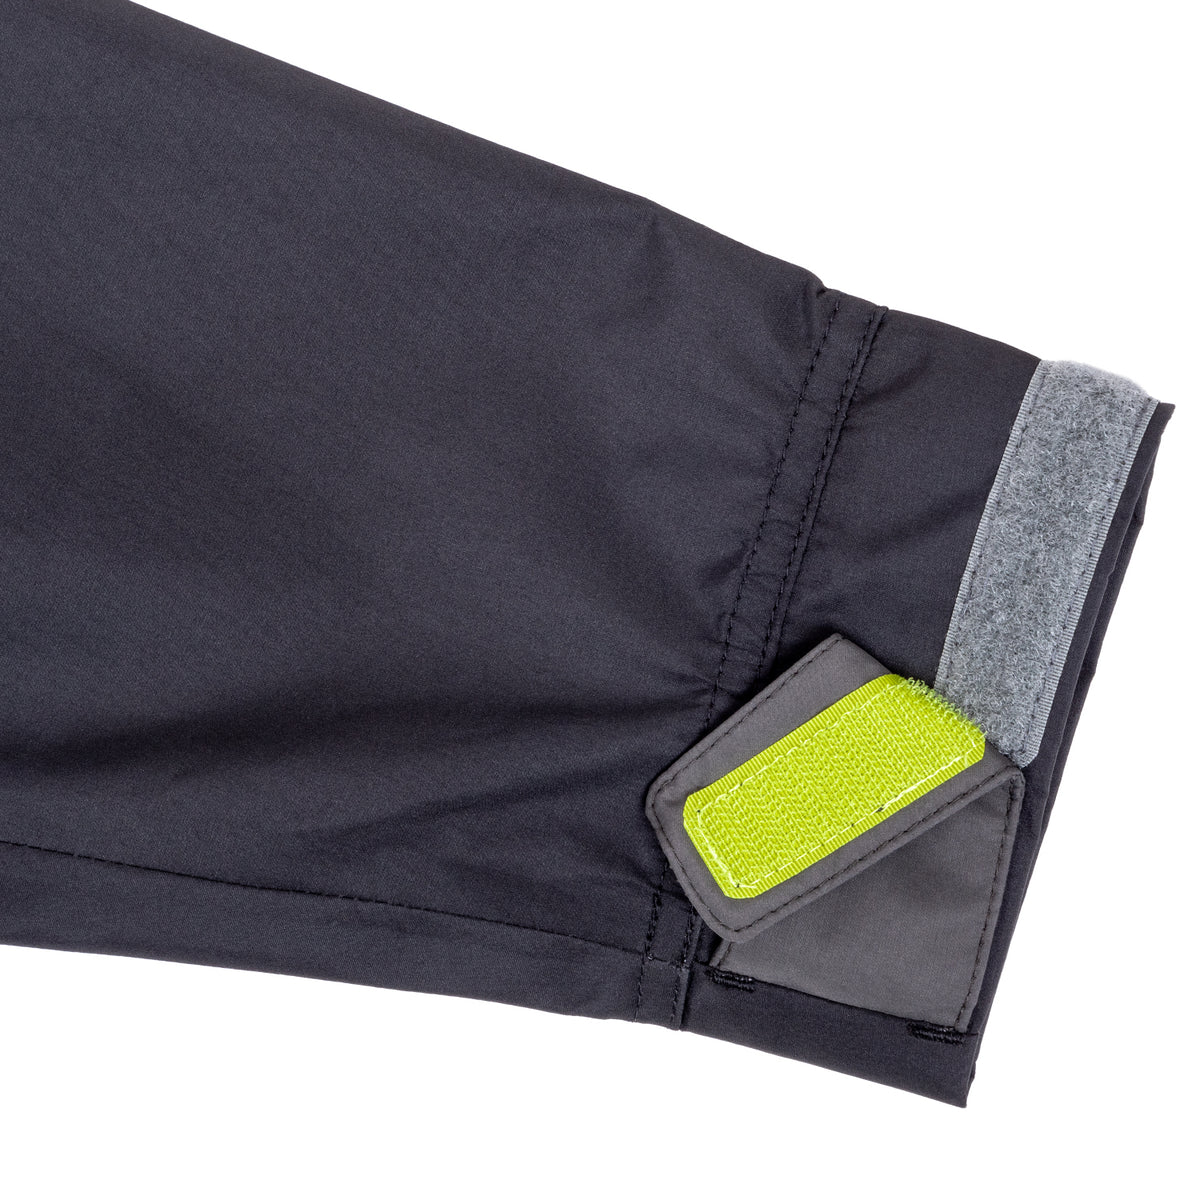 Sink or Swim Jacket  3 Layer Waterproof & Breathable Fabric